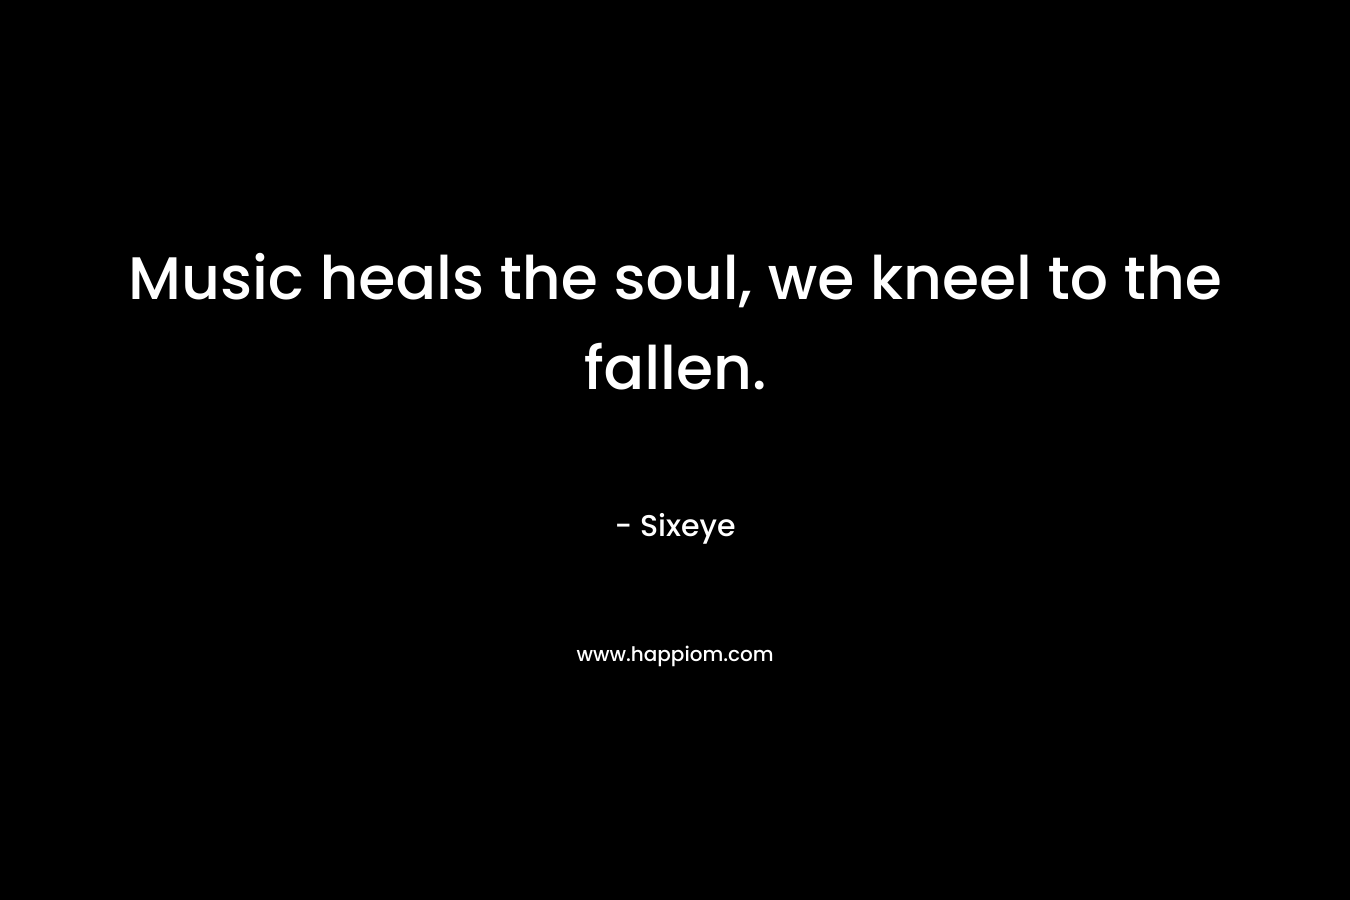 Music heals the soul, we kneel to the fallen. – Sixeye